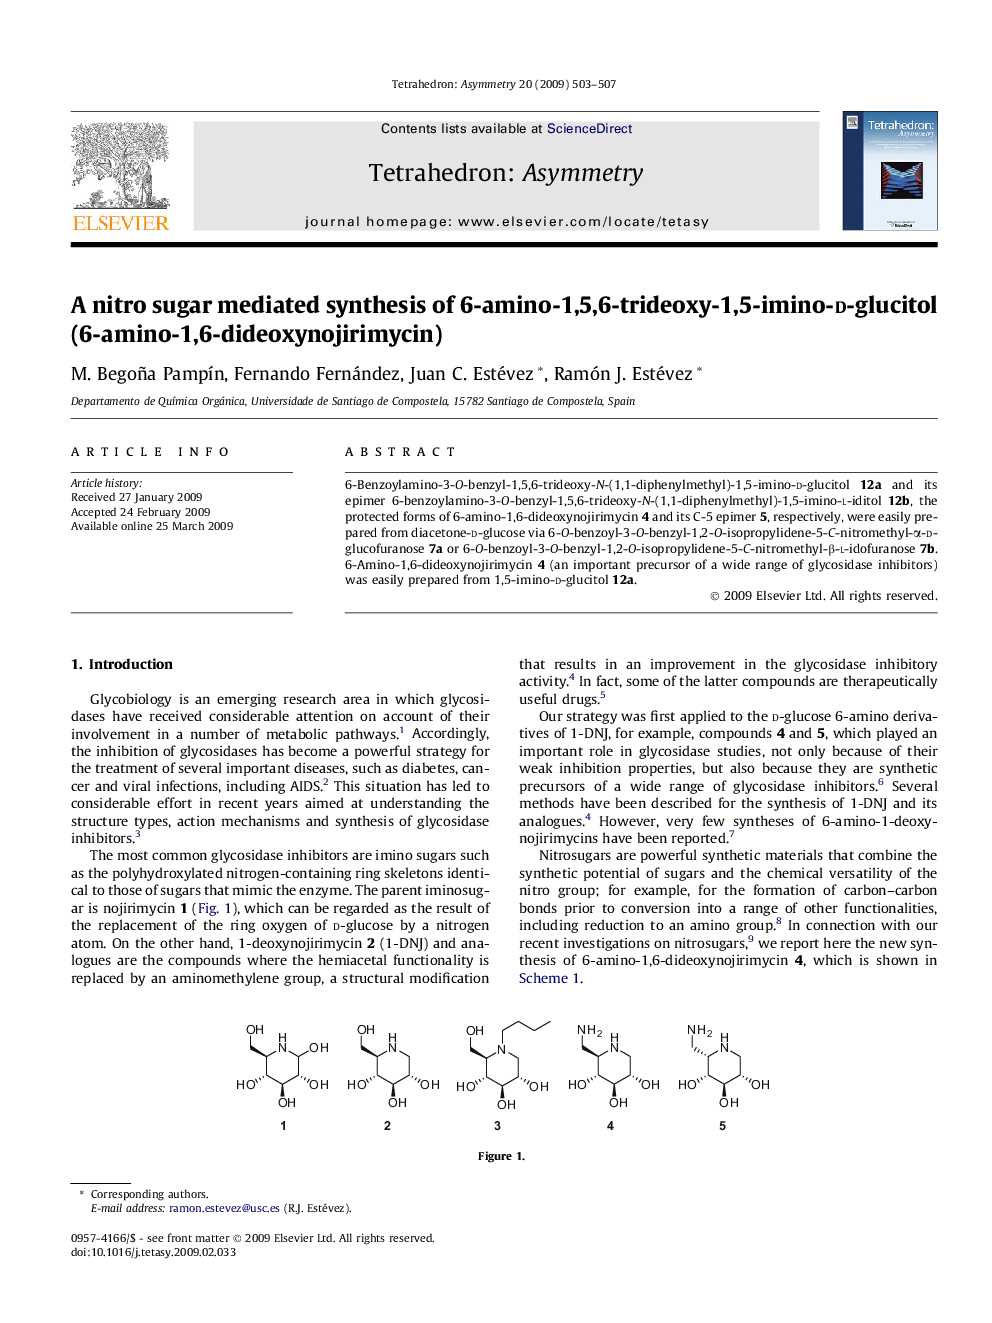 A nitro sugar mediated synthesis of 6-amino-1,5,6-trideoxy-1,5-imino-d-glucitol (6-amino-1,6-dideoxynojirimycin)